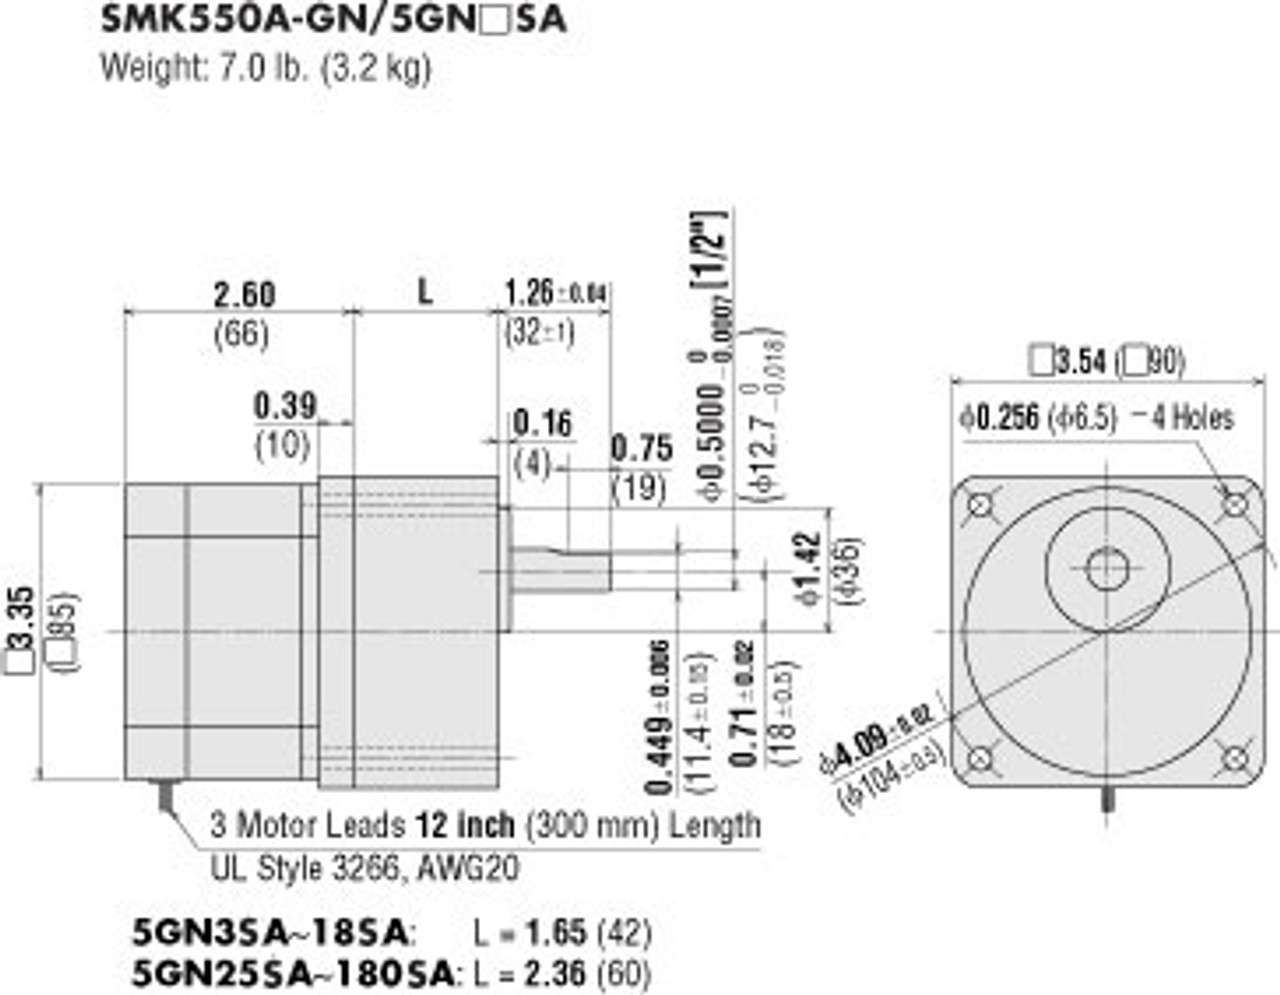 SMK550A-GN / 5GN36SA - Dimensions